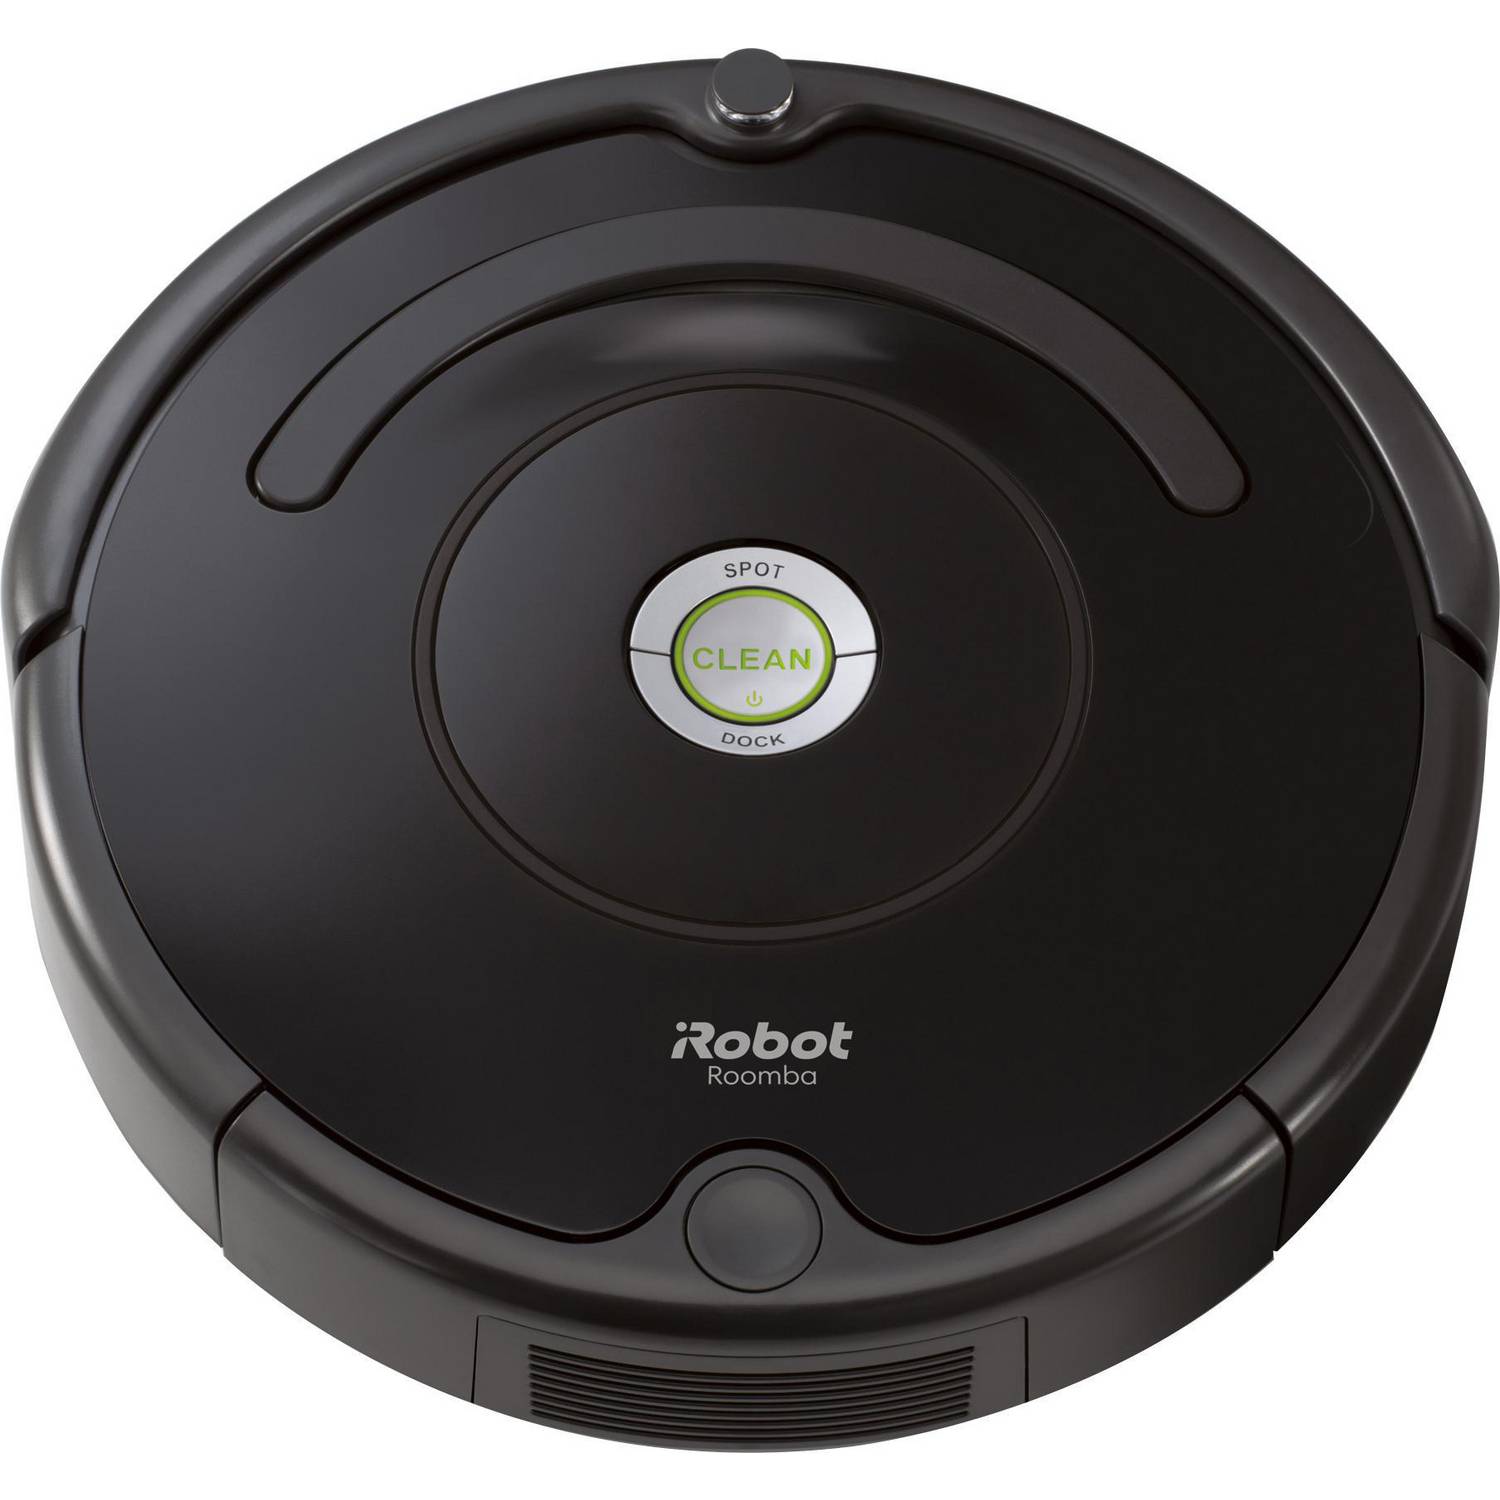 Aspiradora Robot Irobot Roomba 614